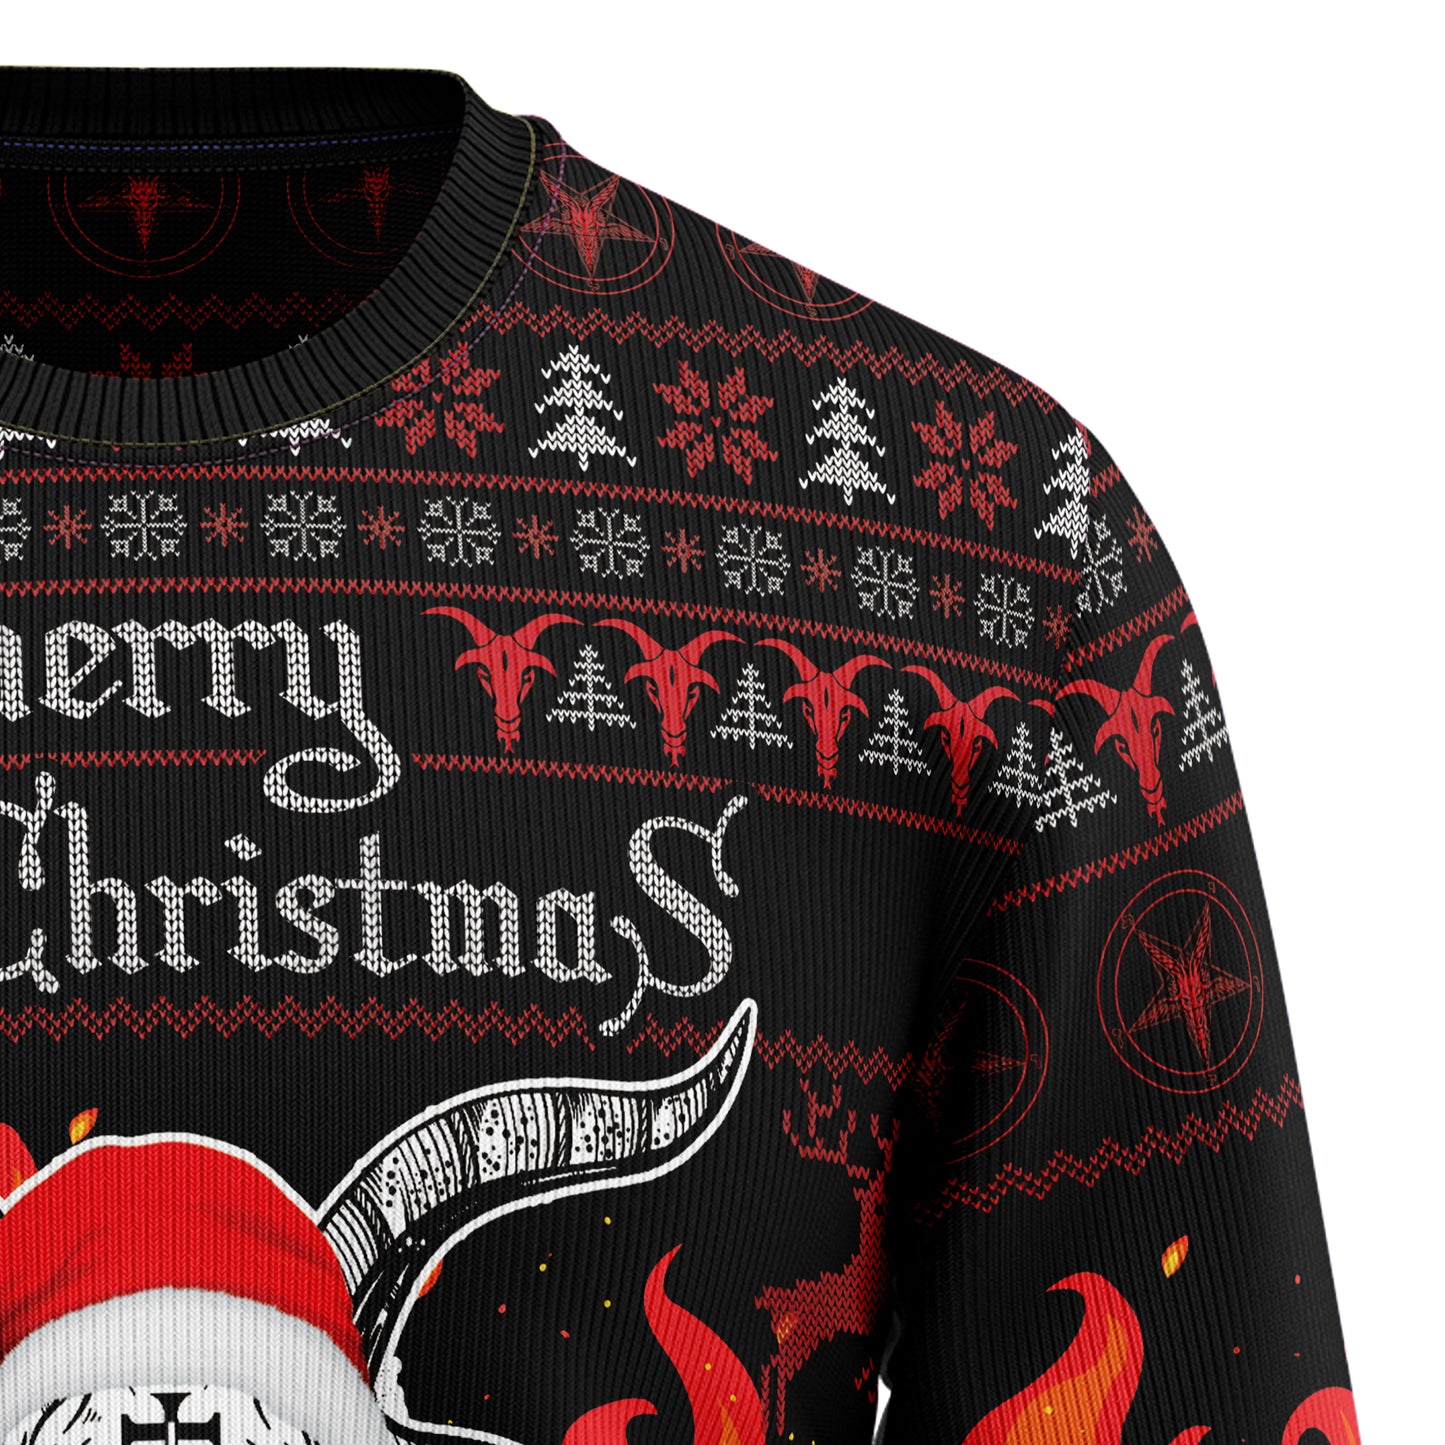 Satan Claus Merry Christmas Hail Satanic G51020 Ugly Christmas Sweater